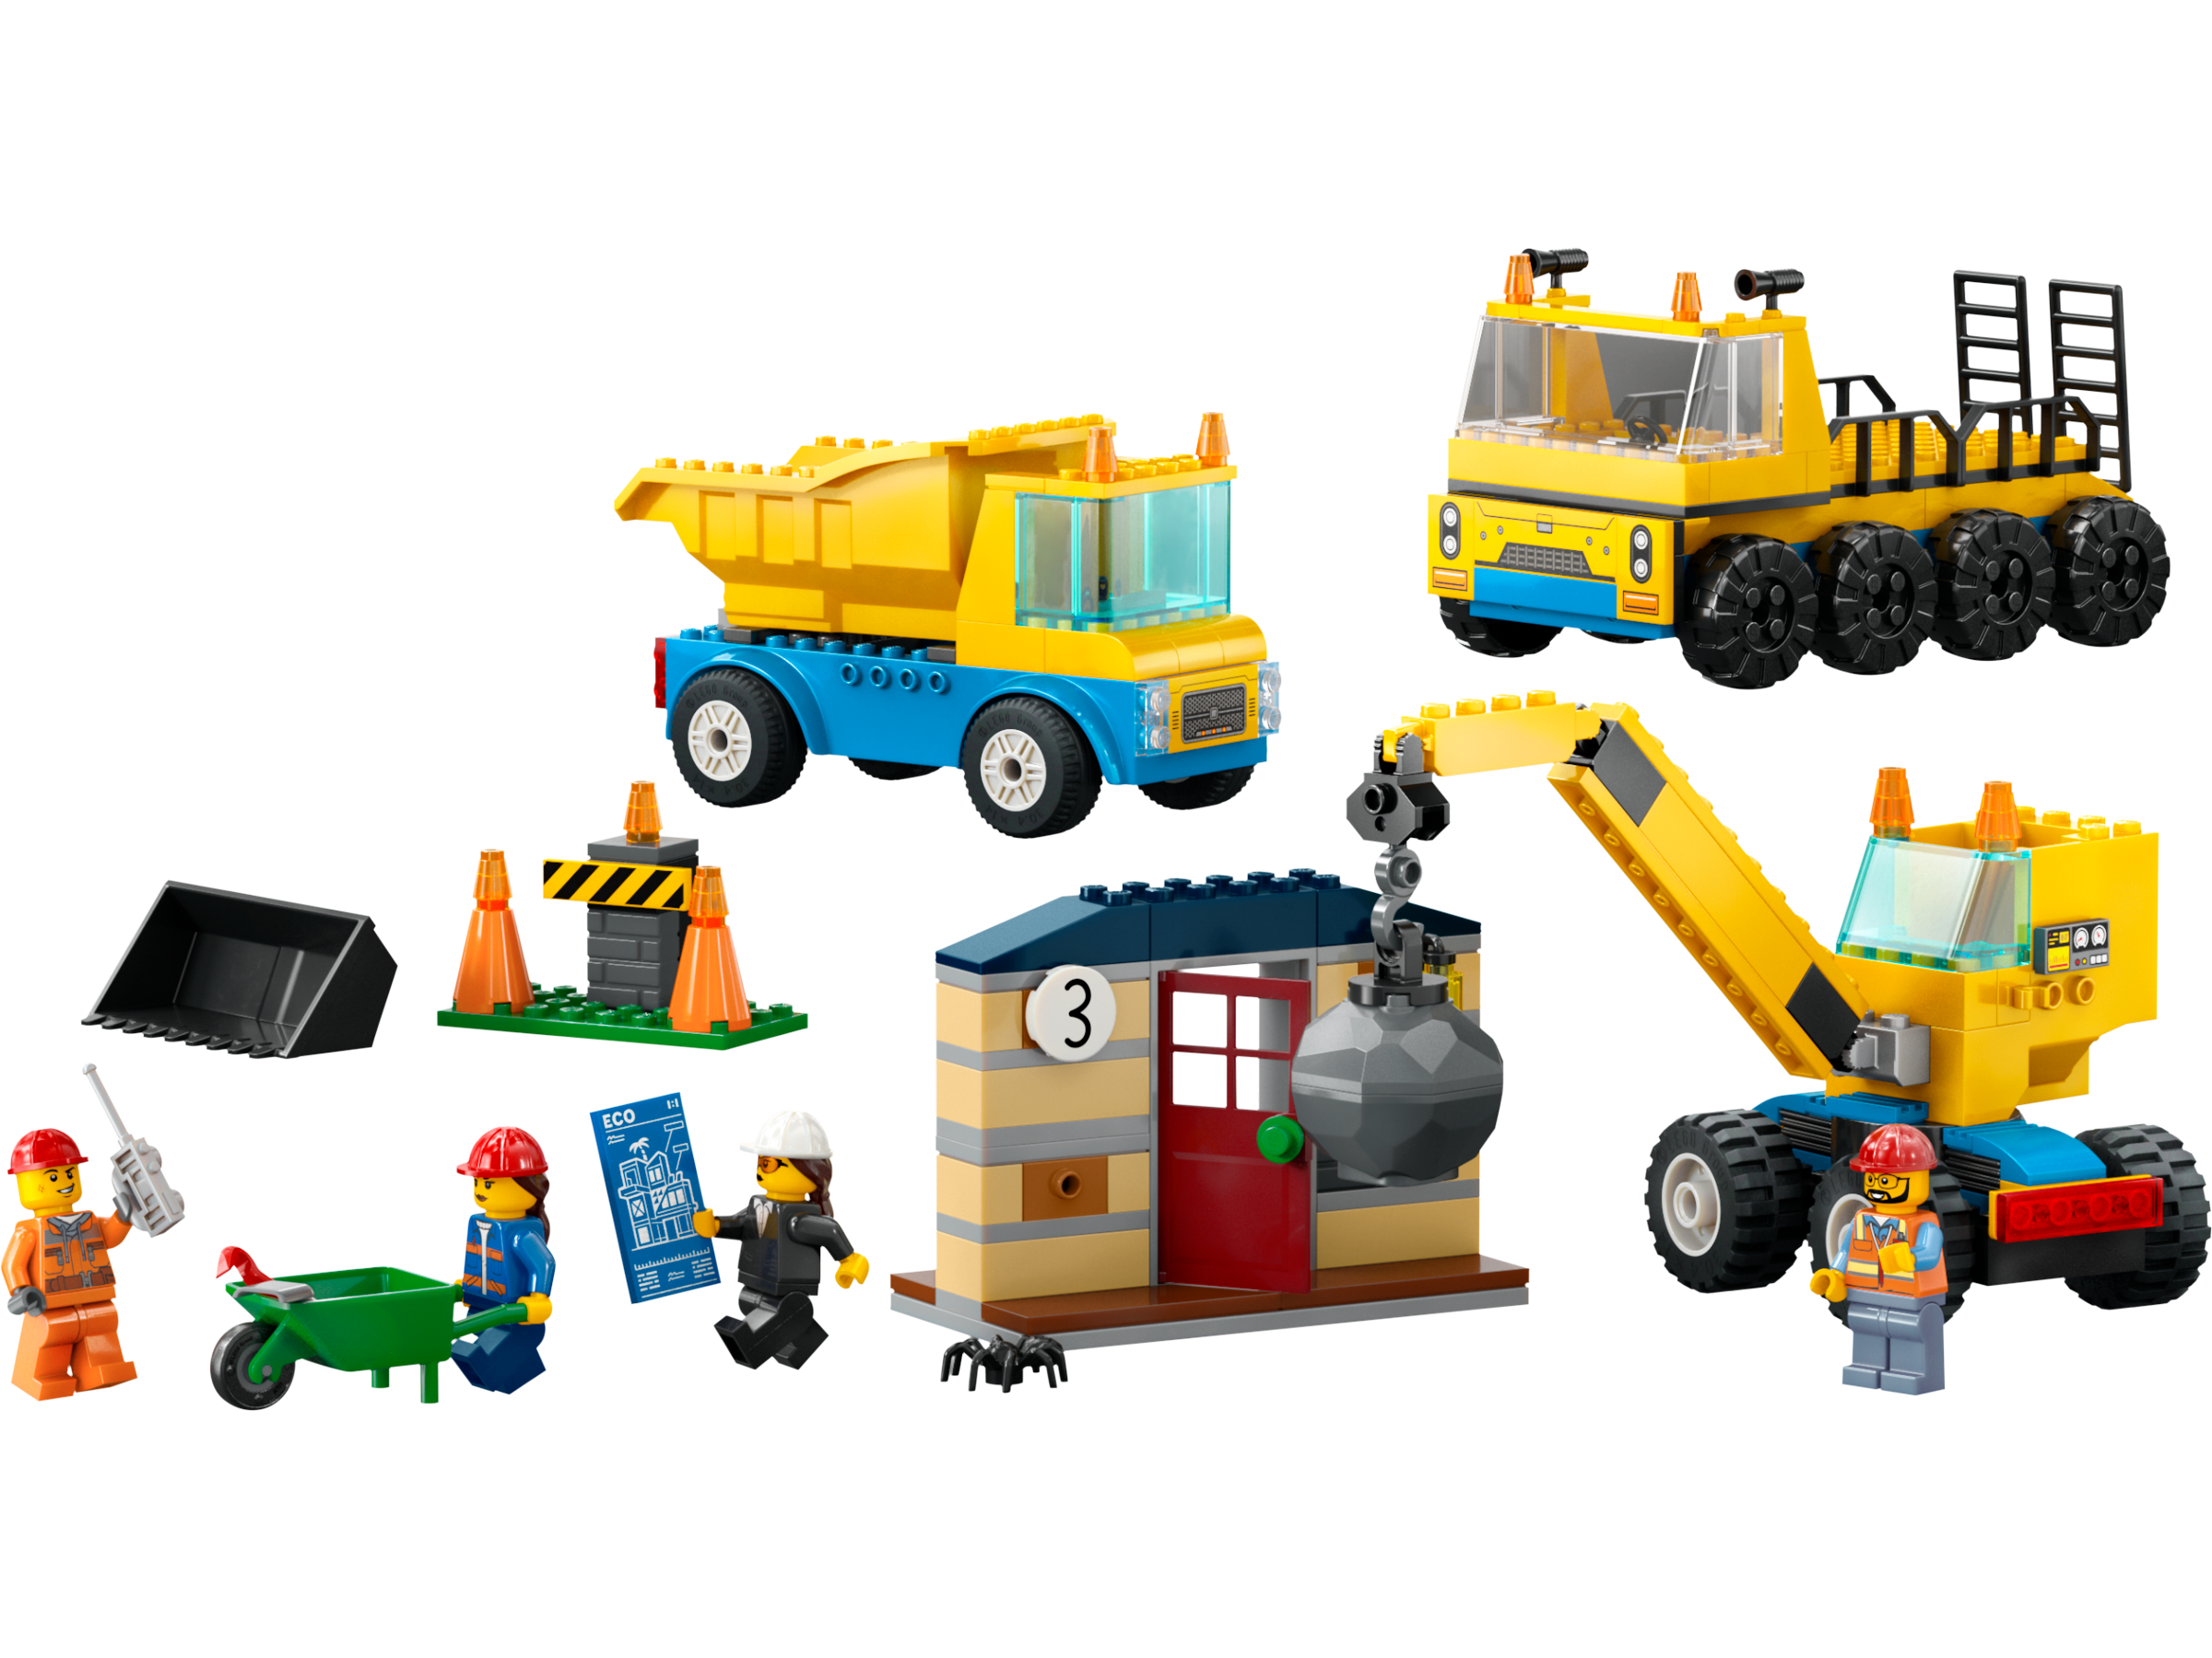 Auto Betoniera Lego City Grat Vehicles +4 Anni